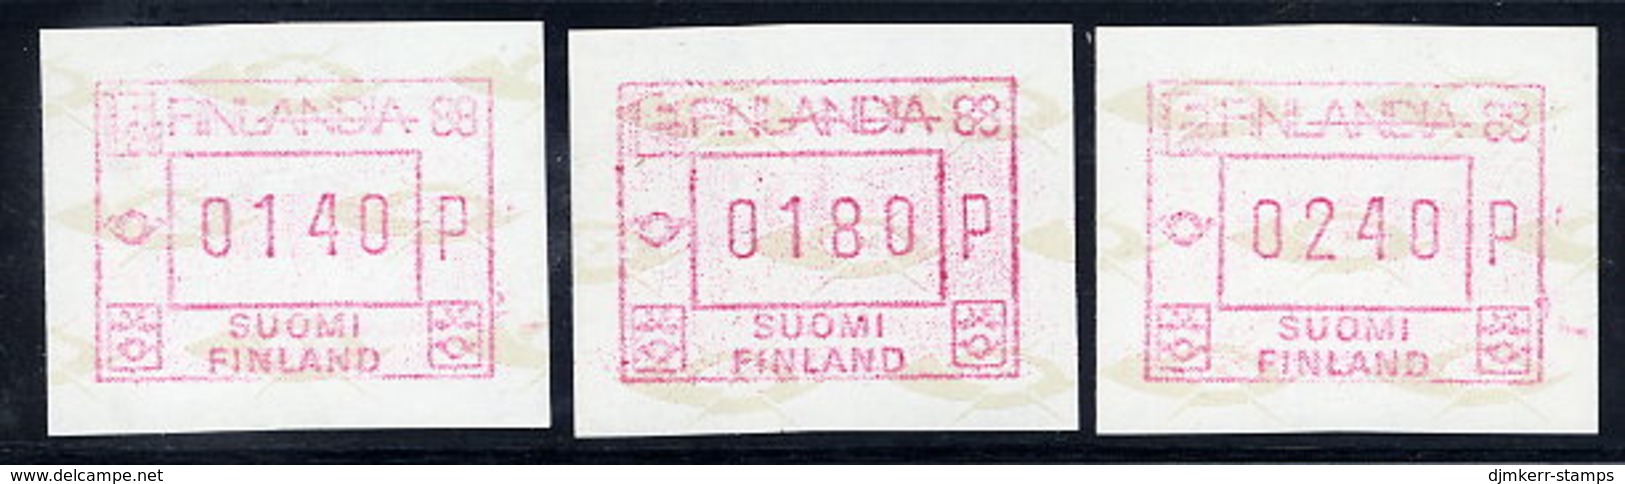 FINLAND 1988 FINLANDIA '88  Issue 3 Different Values MNH / ** .  Michel 4 - Timbres De Distributeurs [ATM]